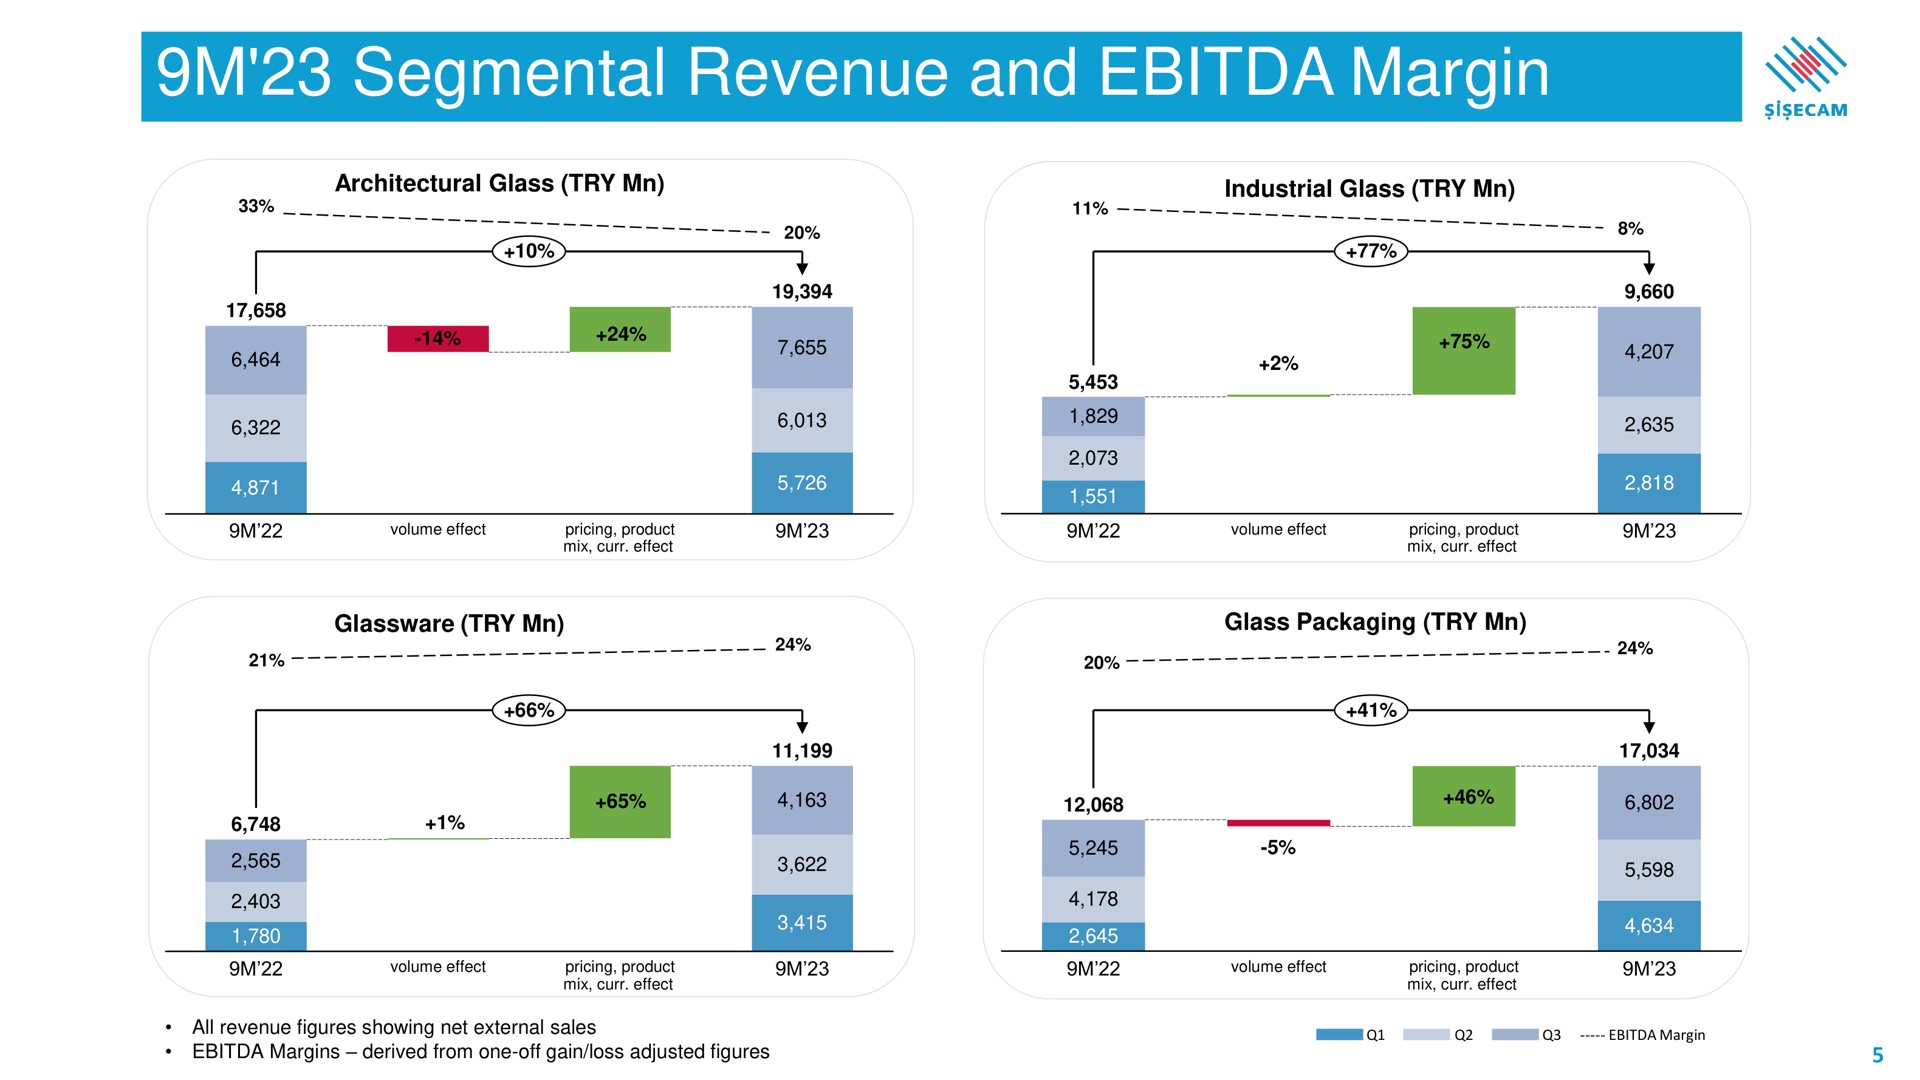 segmental revenue and margin | Sisecam Resources